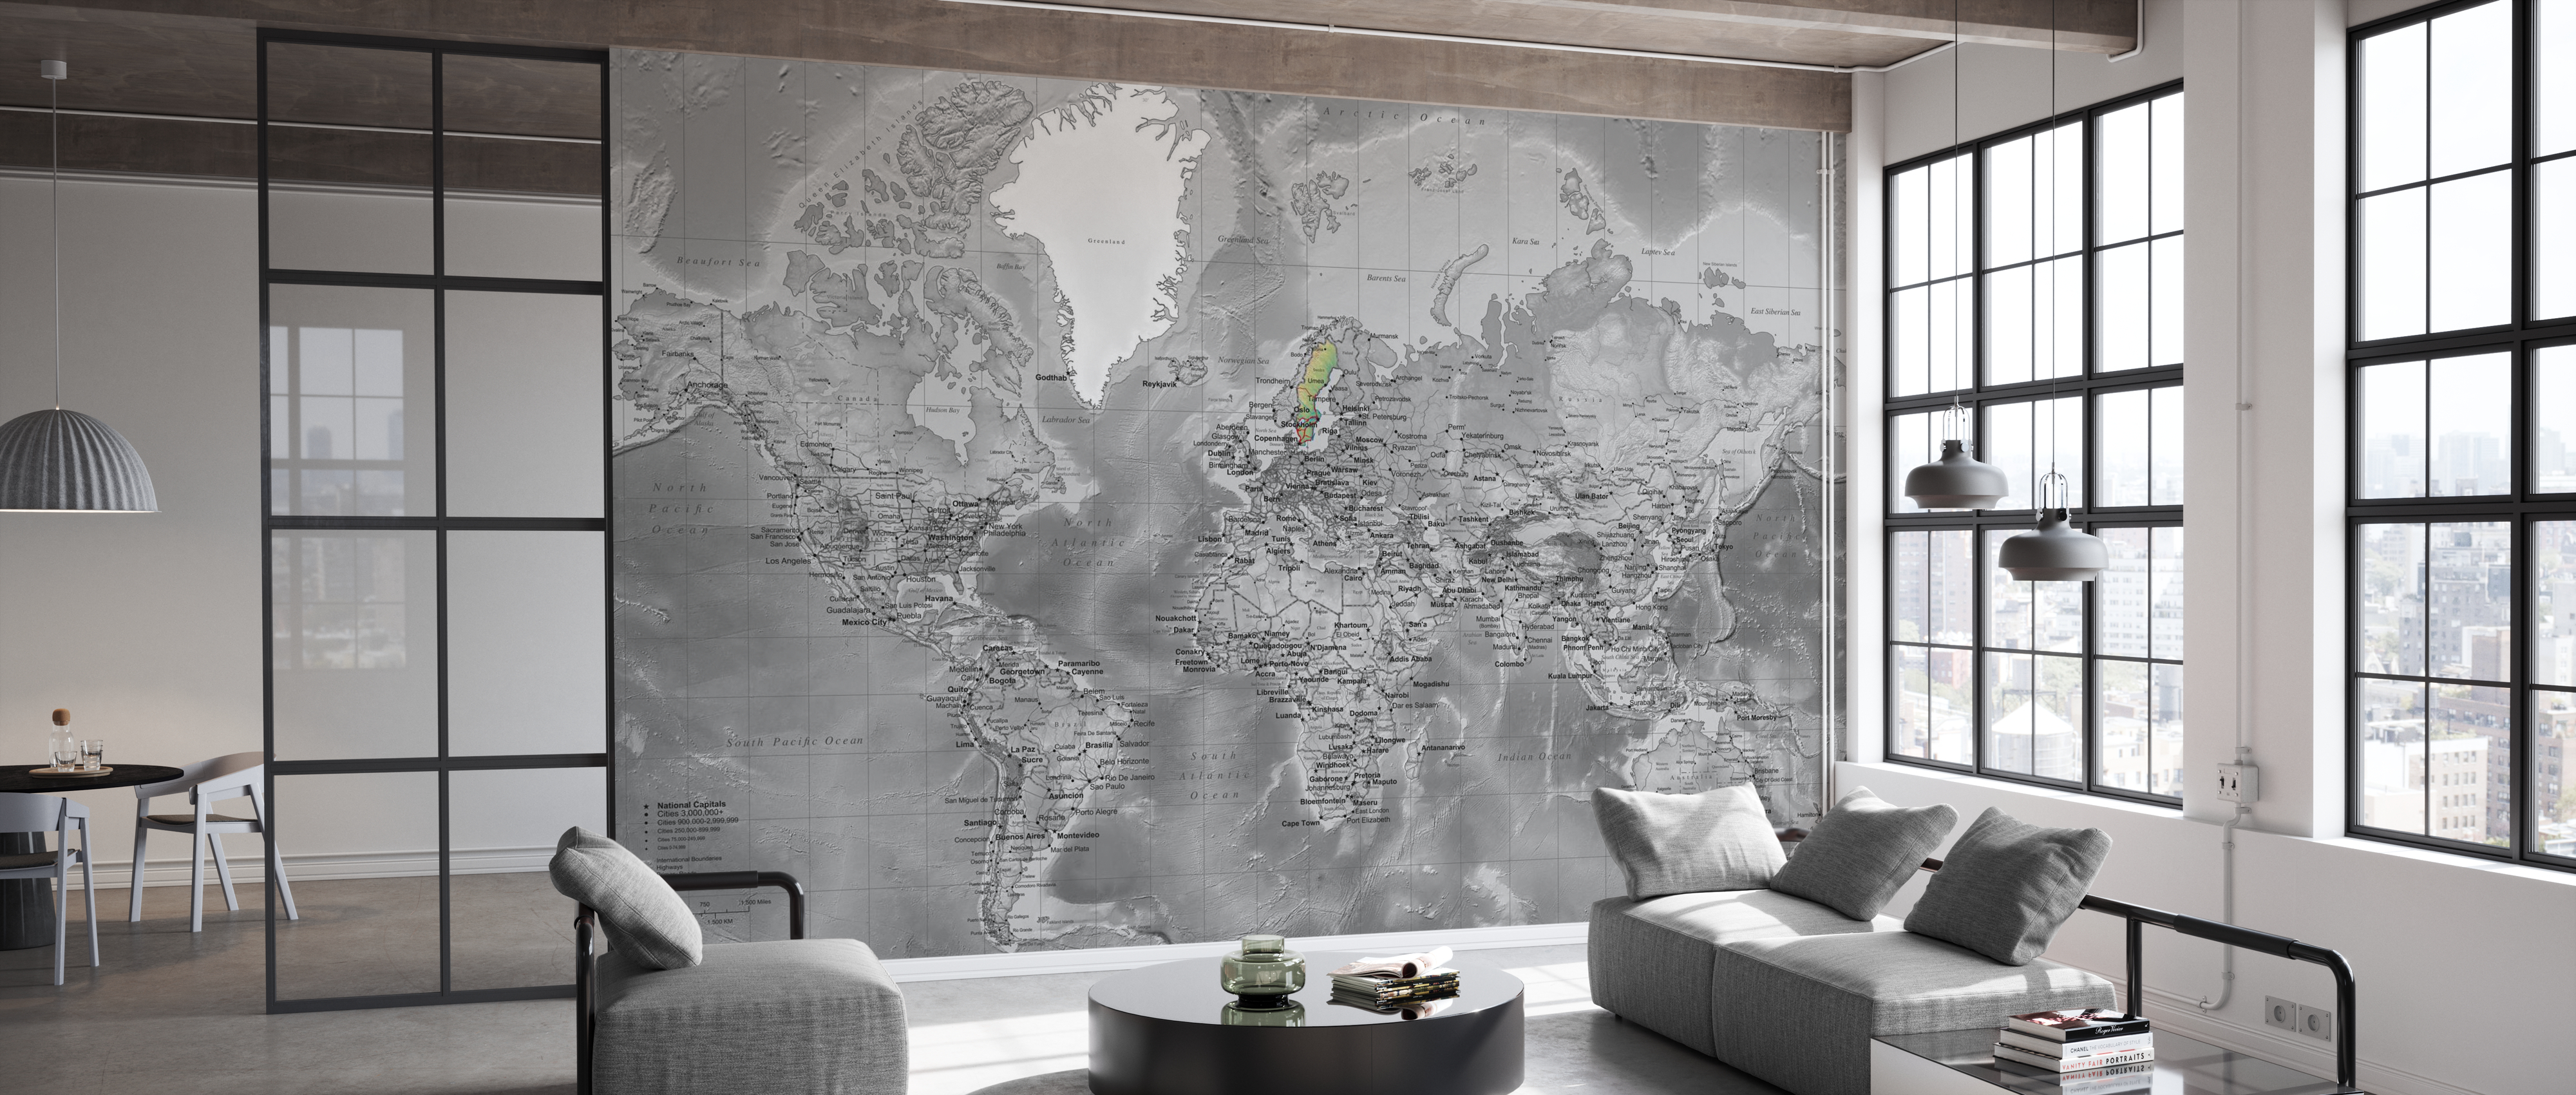 Fototapet World Map, Detailed with Roads, Colorsplash, personalizat, Photowall  image0